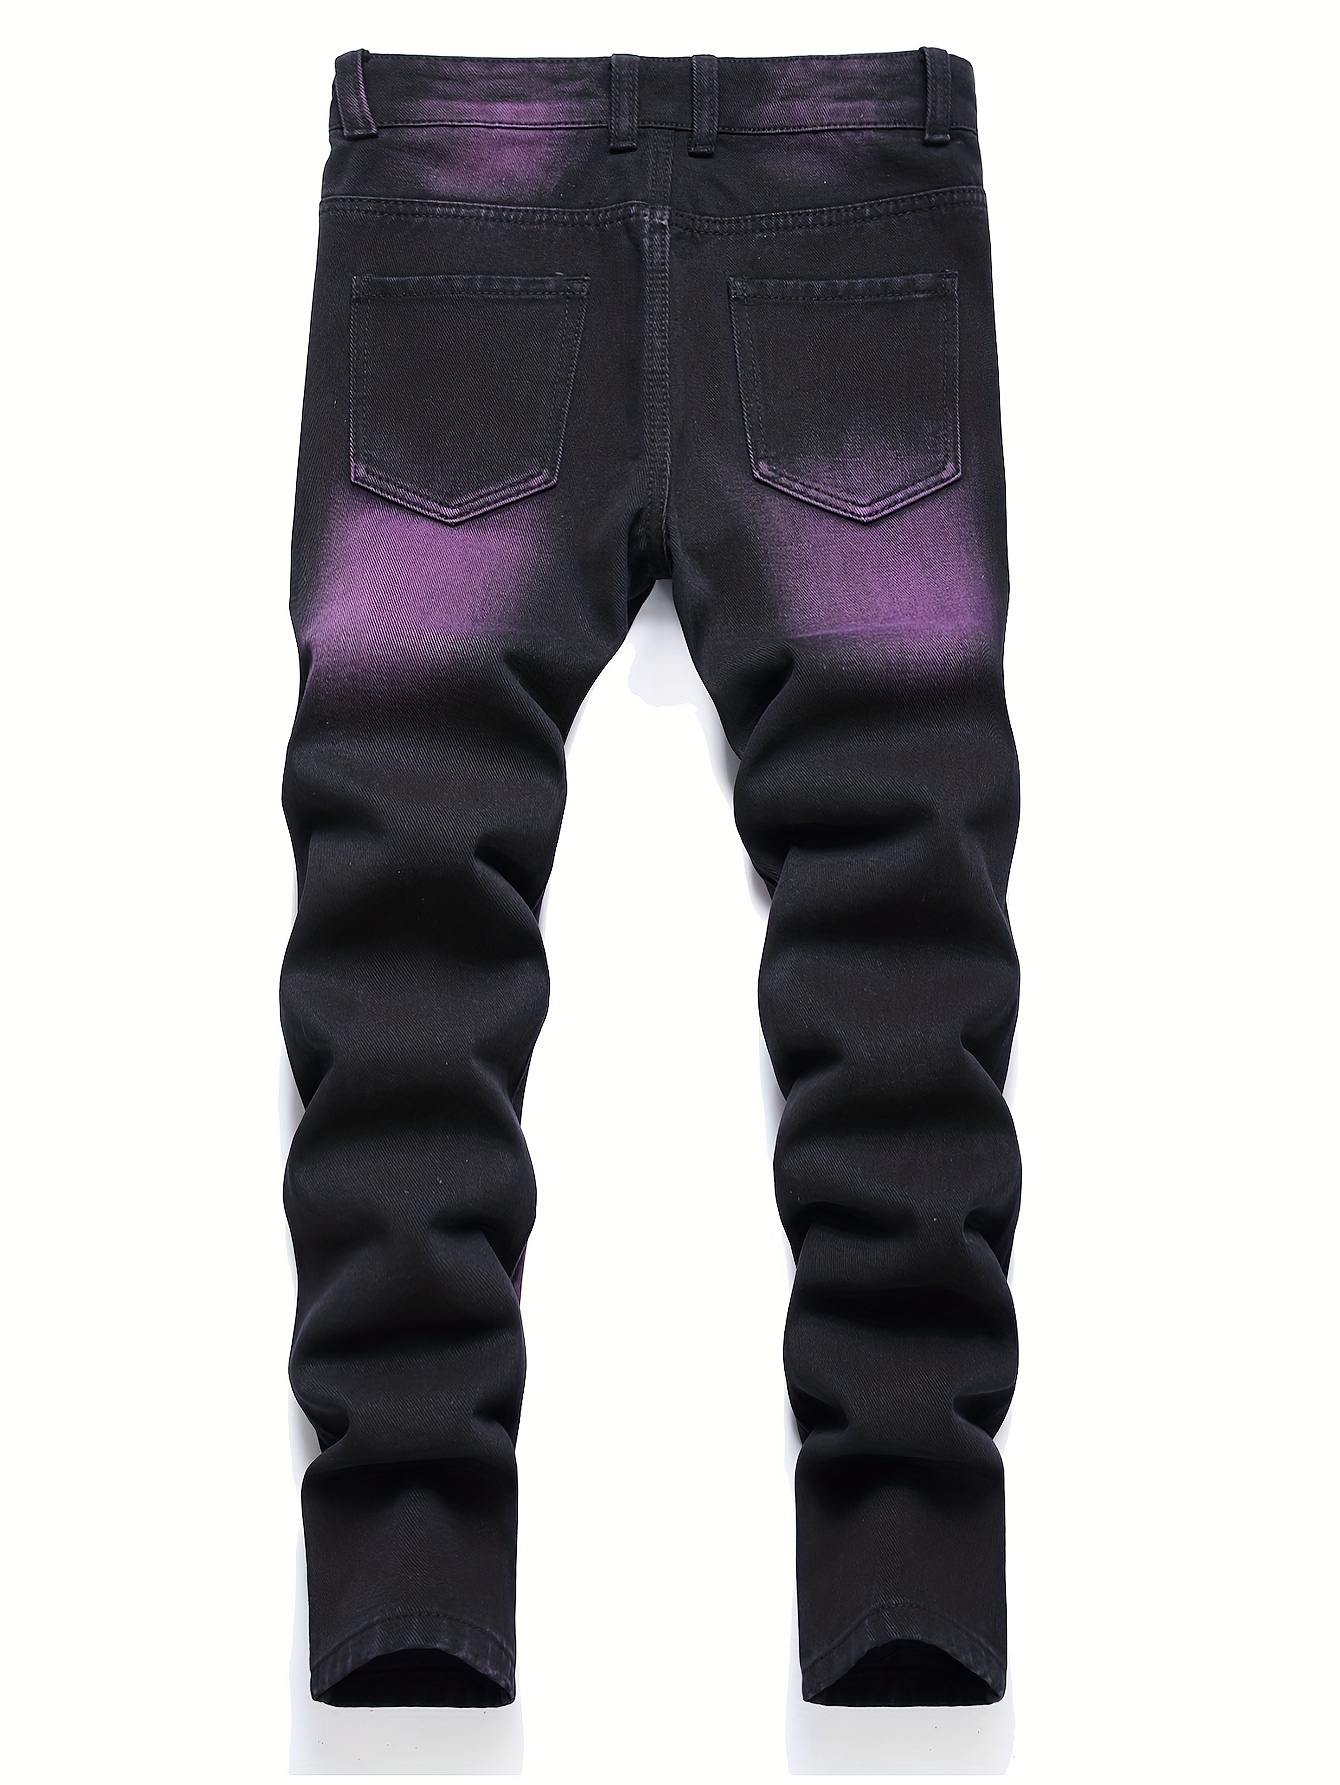 Kid's Purple & Black Color Clash Jeans, Ripped Denim Pants, Boy's Clothes  For All Seasons